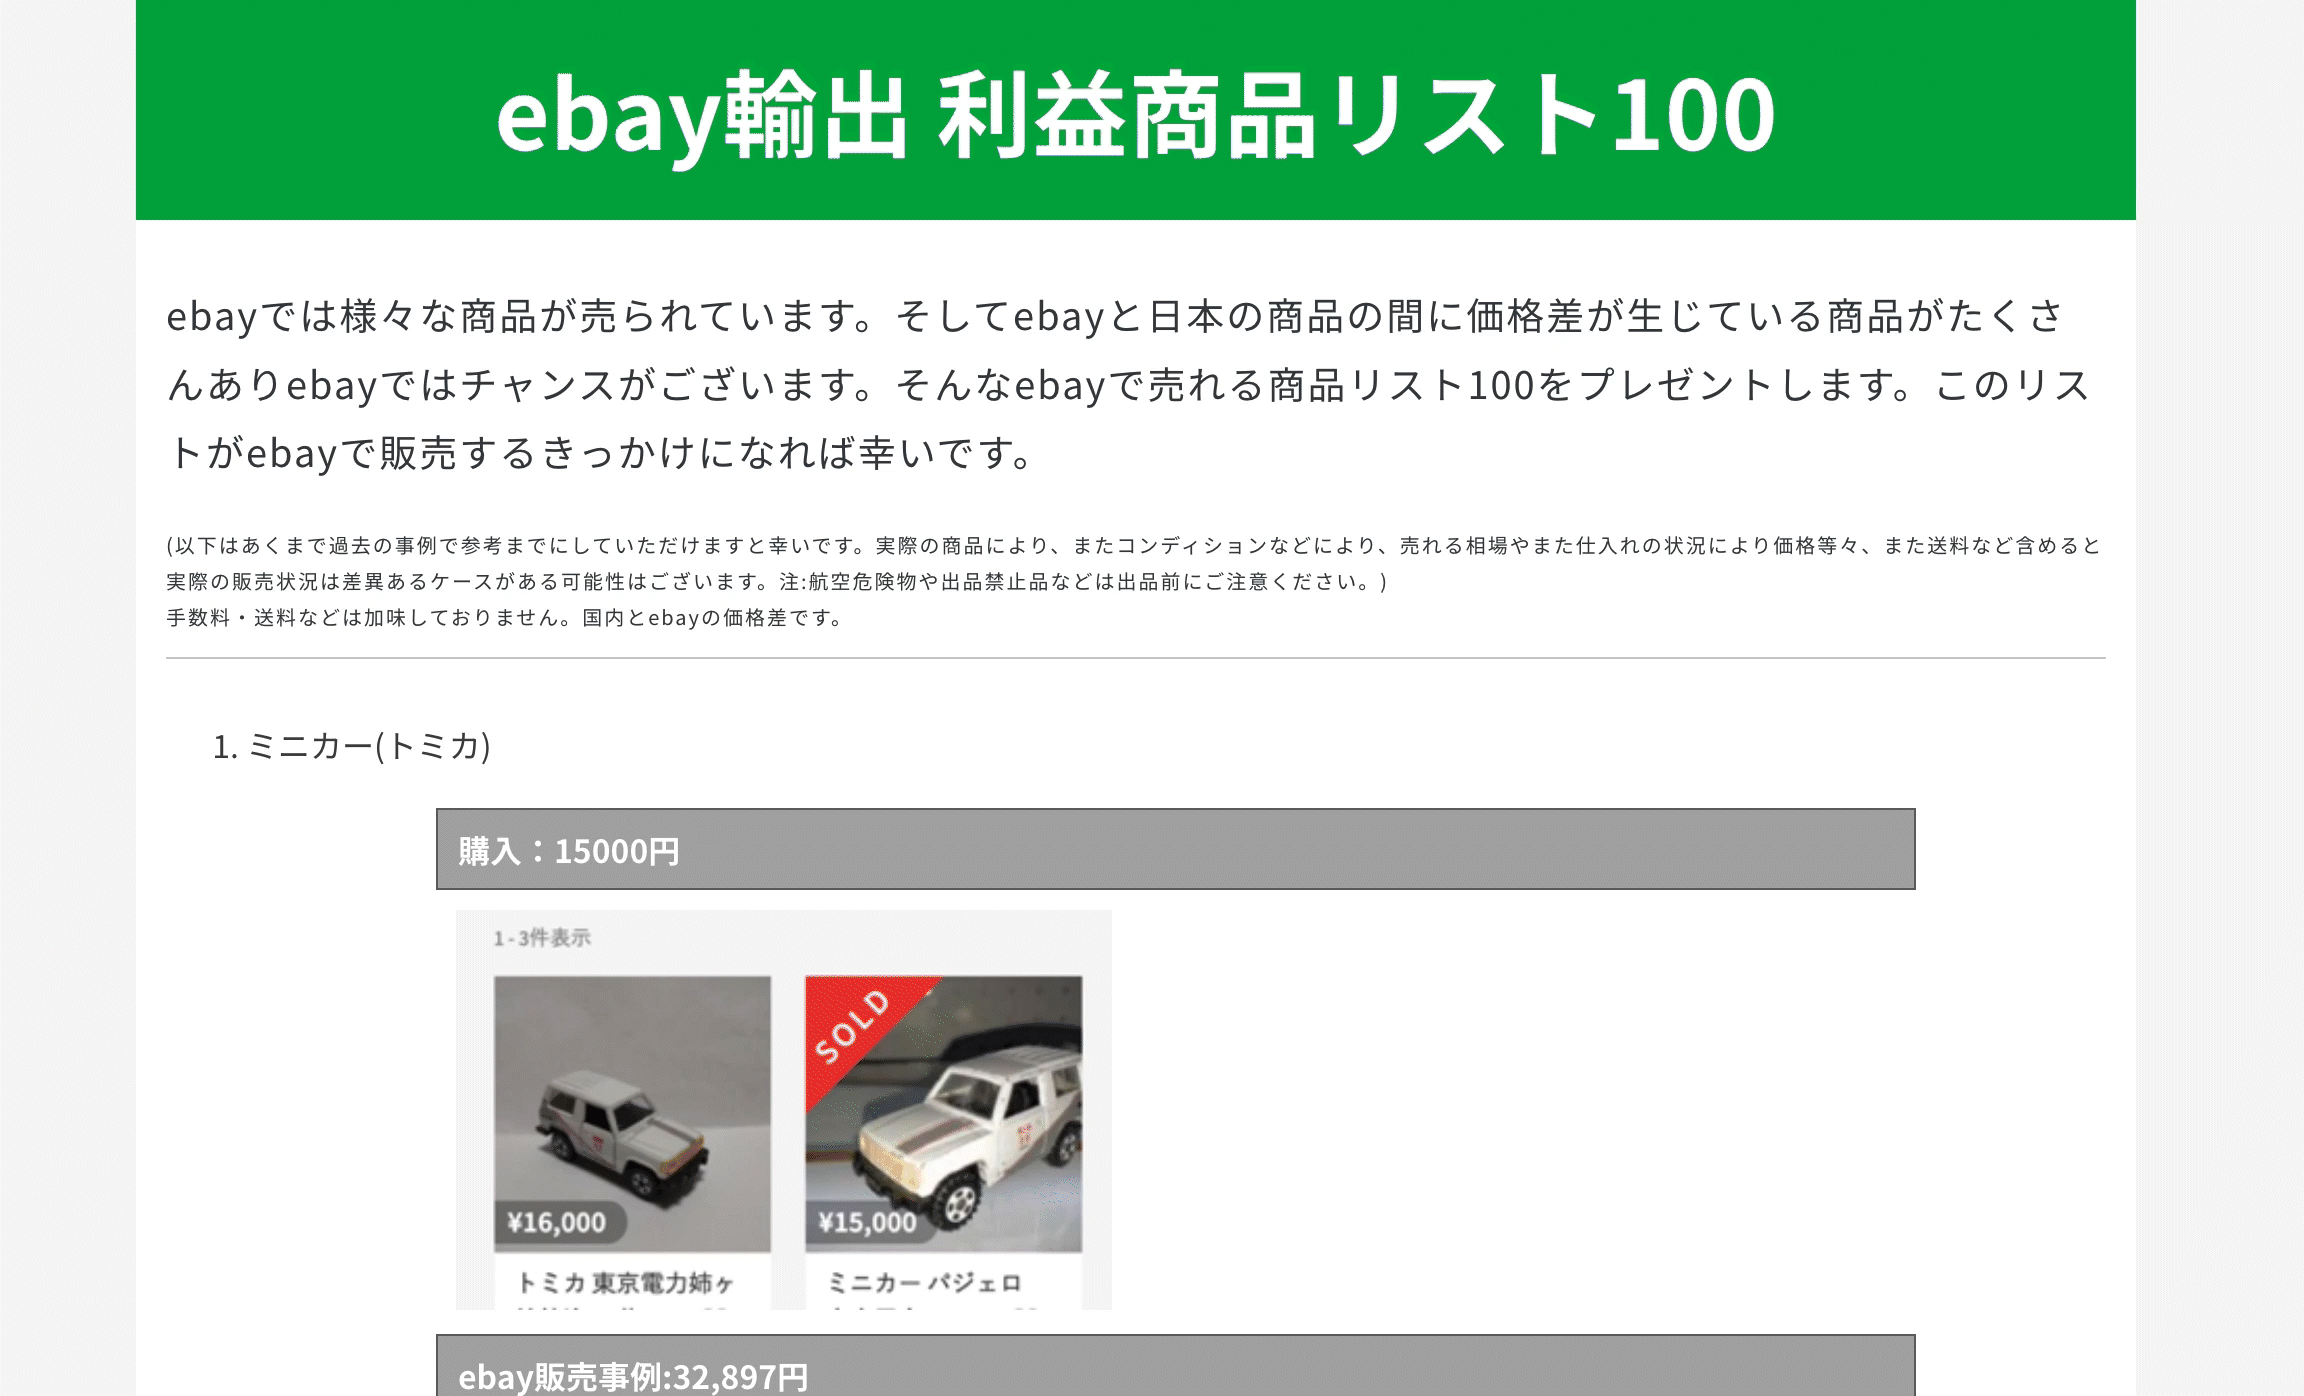 ebay-manual-1